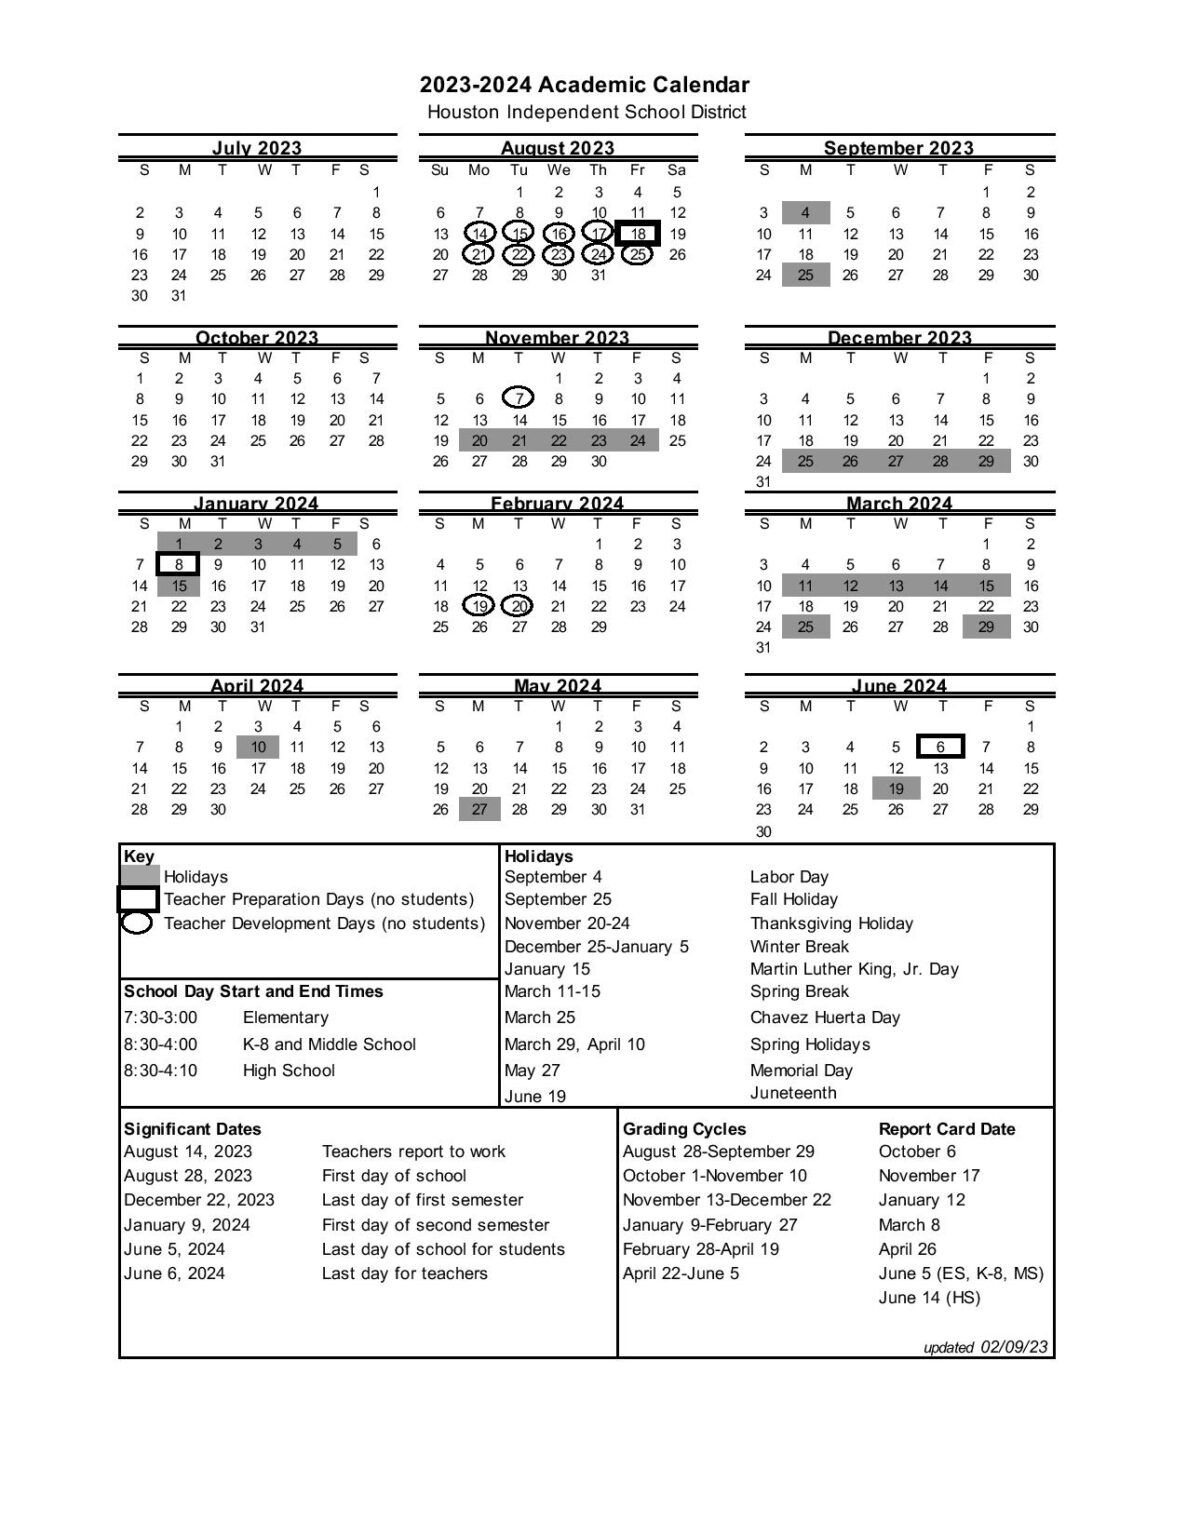 Houston Independent School District Calendar 20232024 PDF School